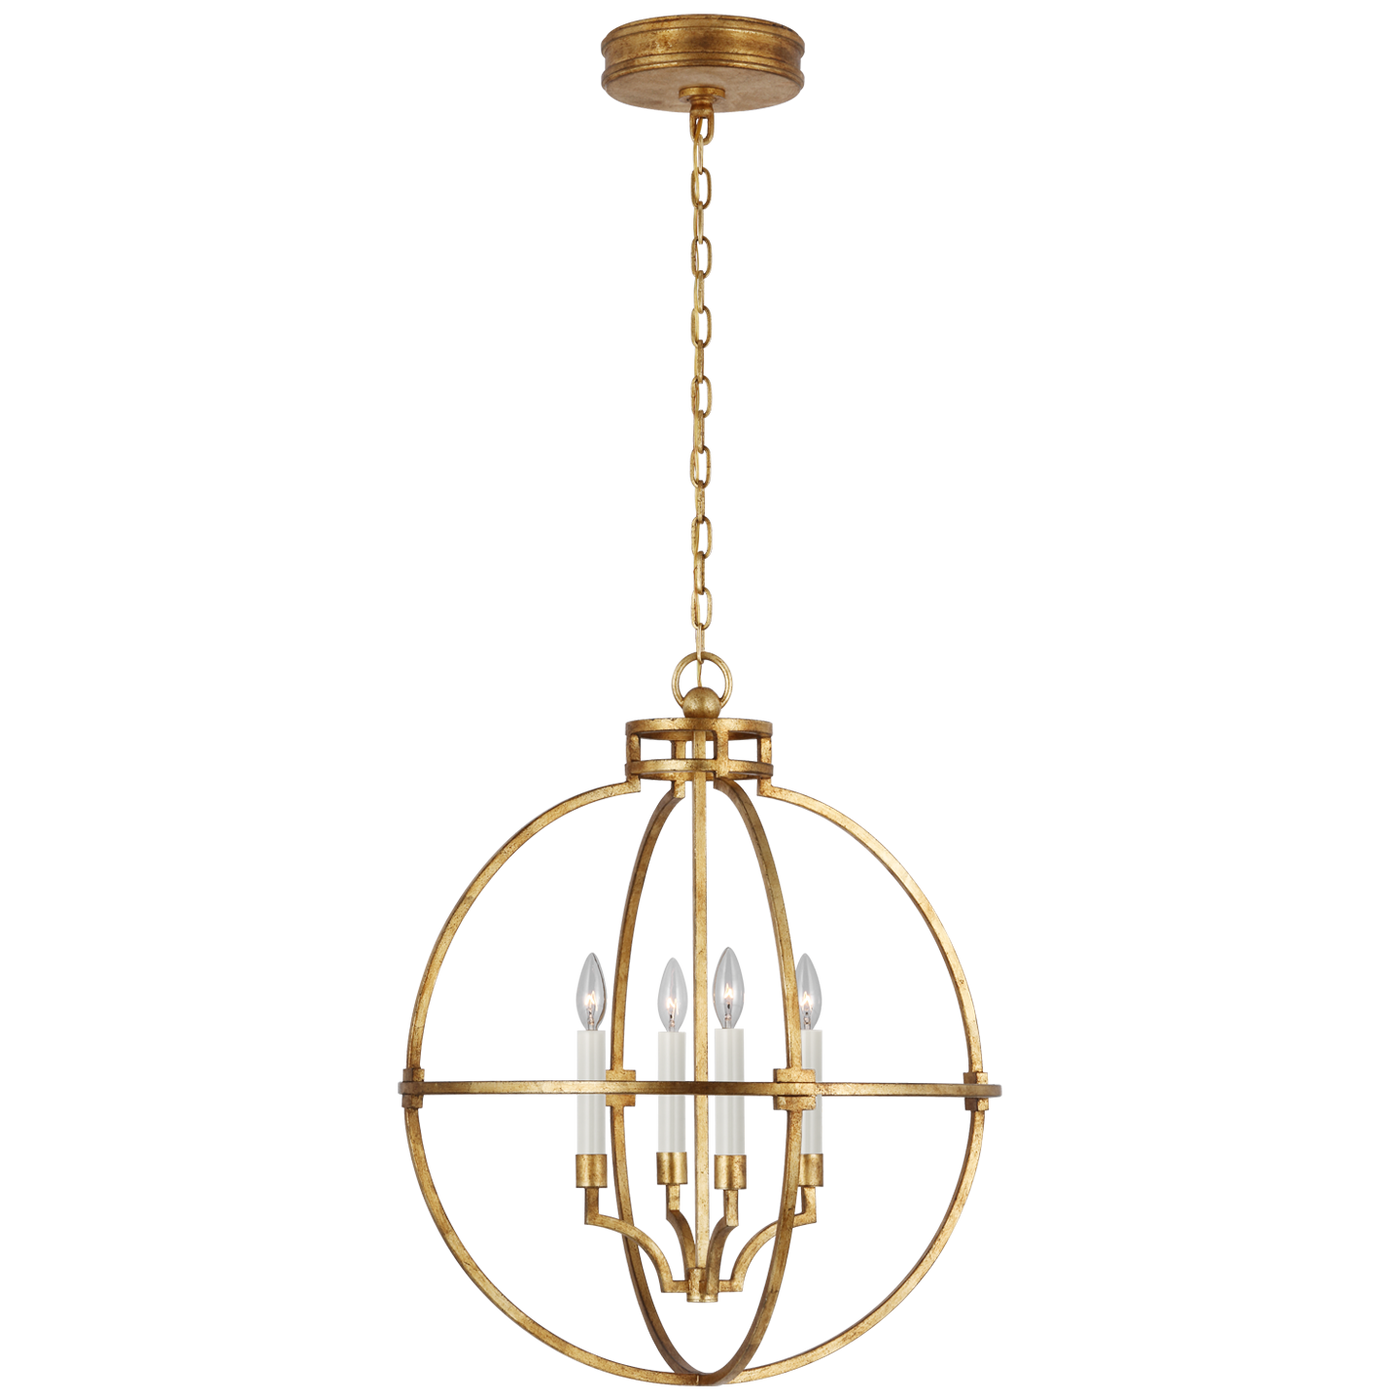 Lexie Globe Lantern in Gilded Iron